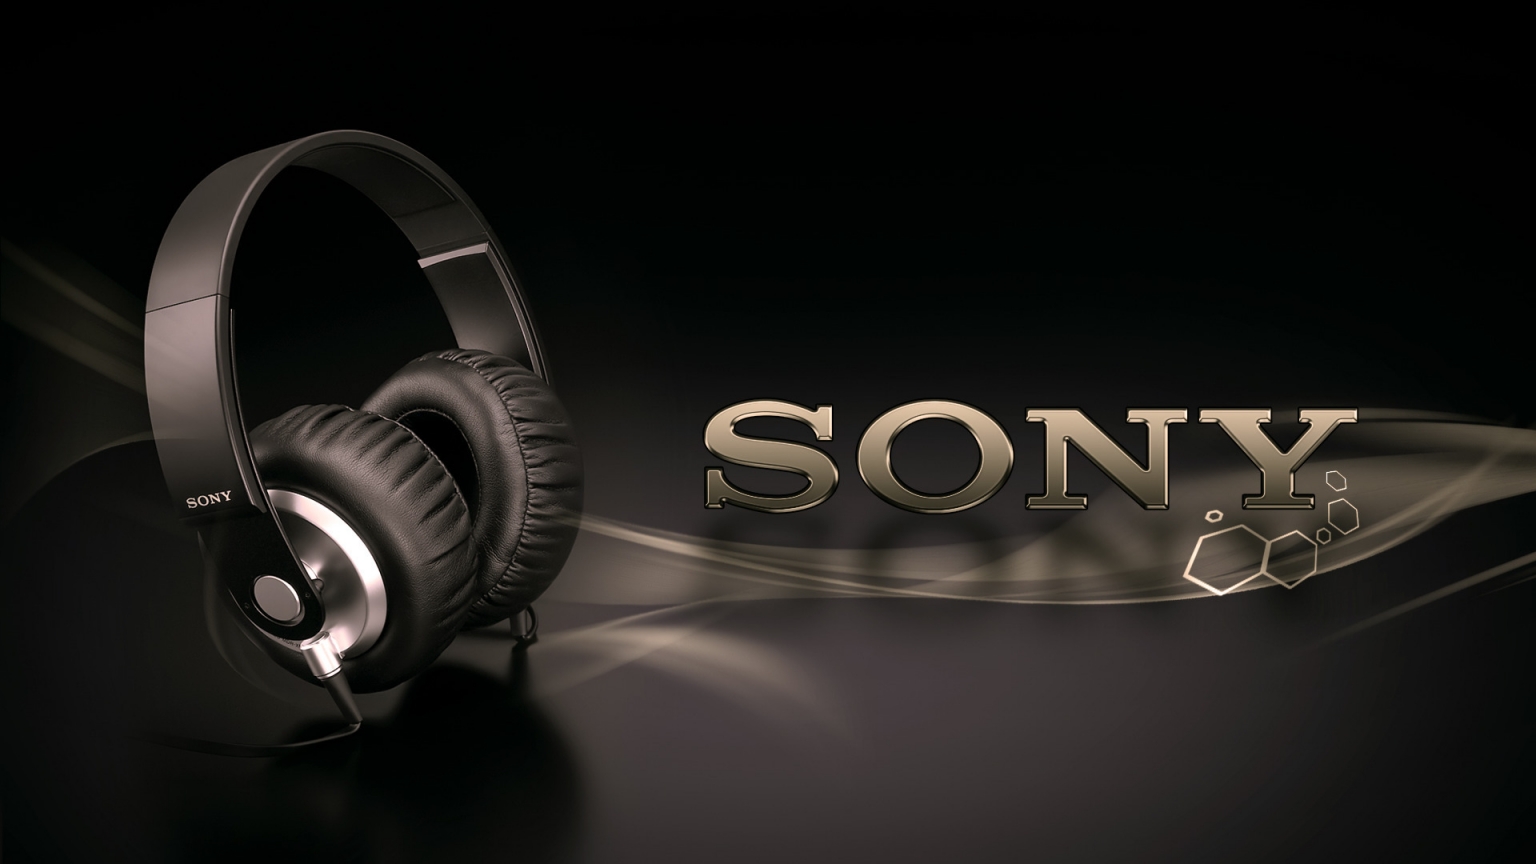 Cool Sony Headphones for 1536 x 864 HDTV resolution